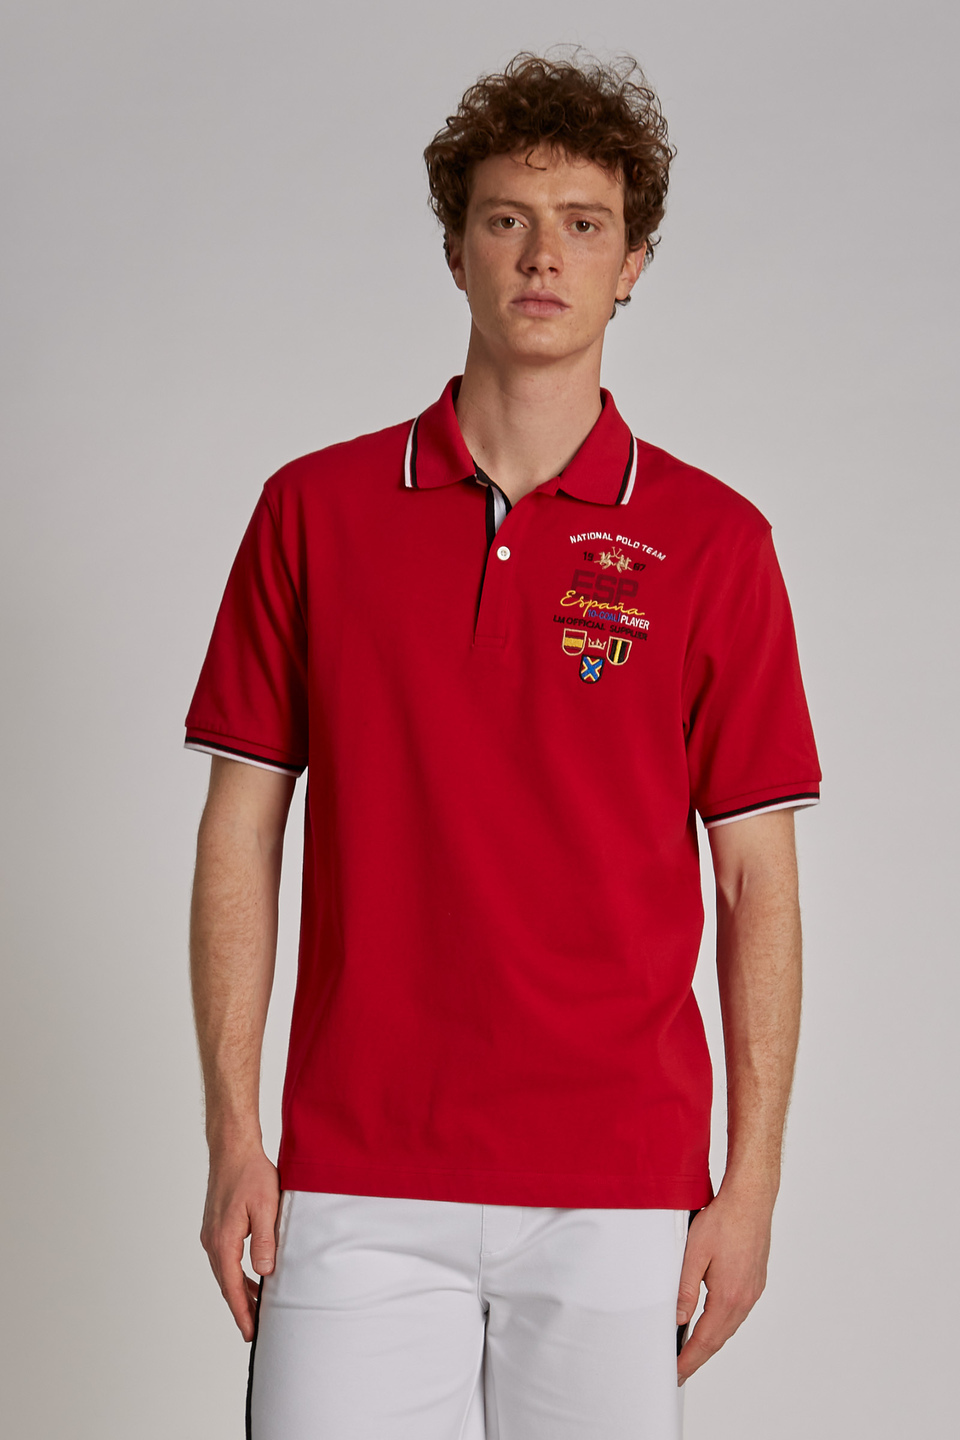 Herren-Poloshirt mit kurzem Arm aus 100 % Baumwolle, oversized Modell | La Martina - Official Online Shop